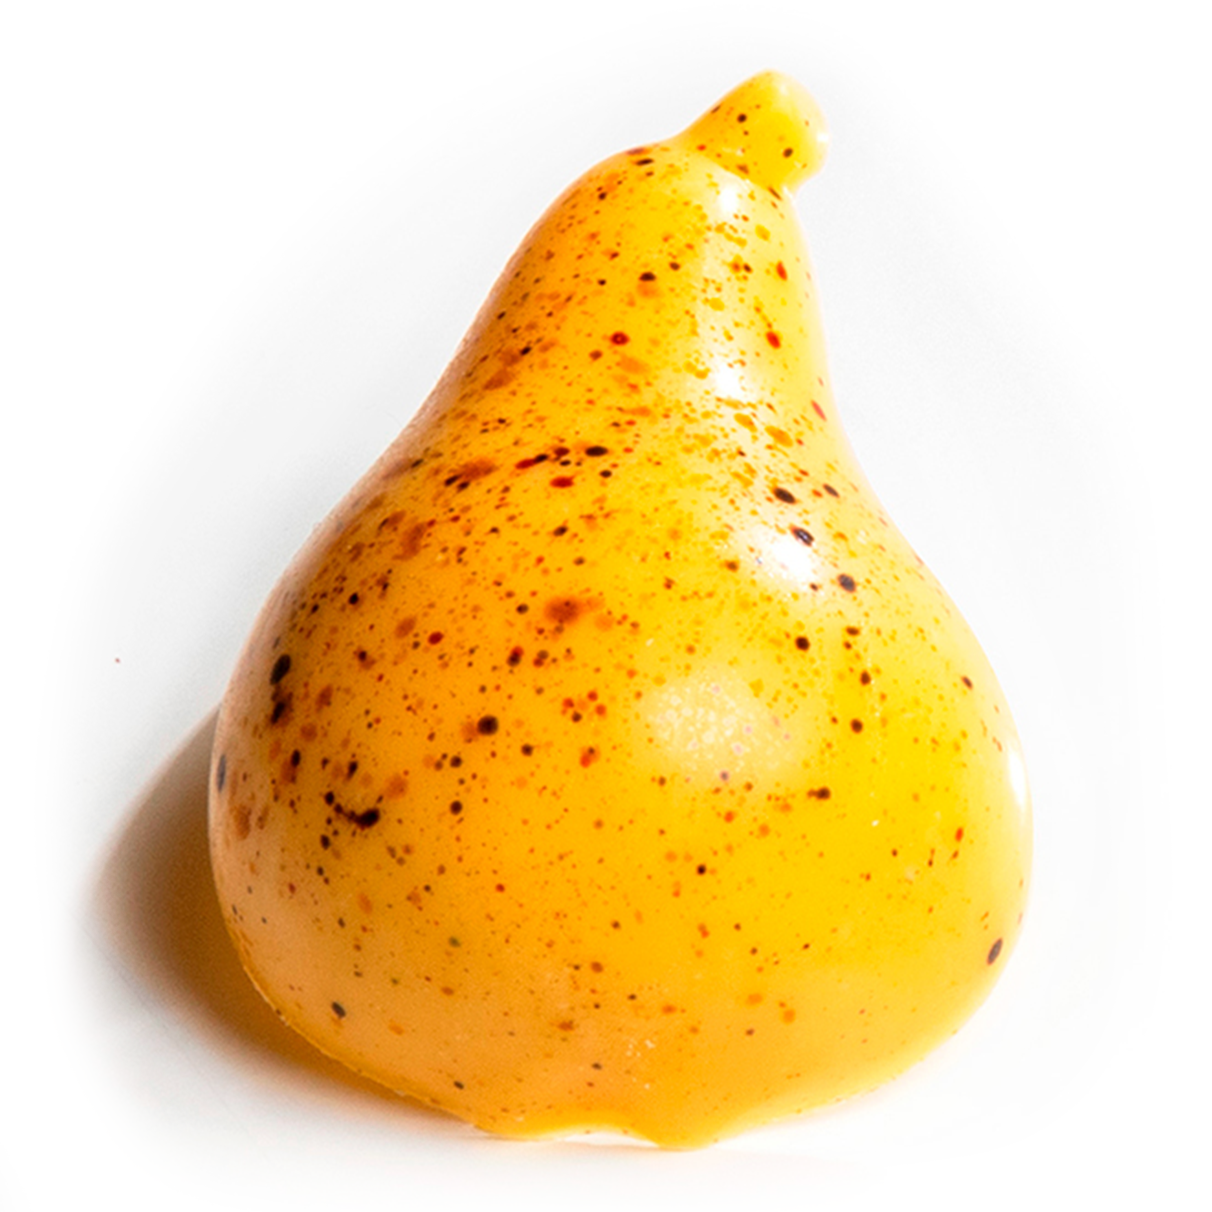 Форма для шоколада «Груша» (Pear) поликарбонатная MA1034, 18 ячеек, Martellato, Италия  | Фото — Магазин Andy Chef  1